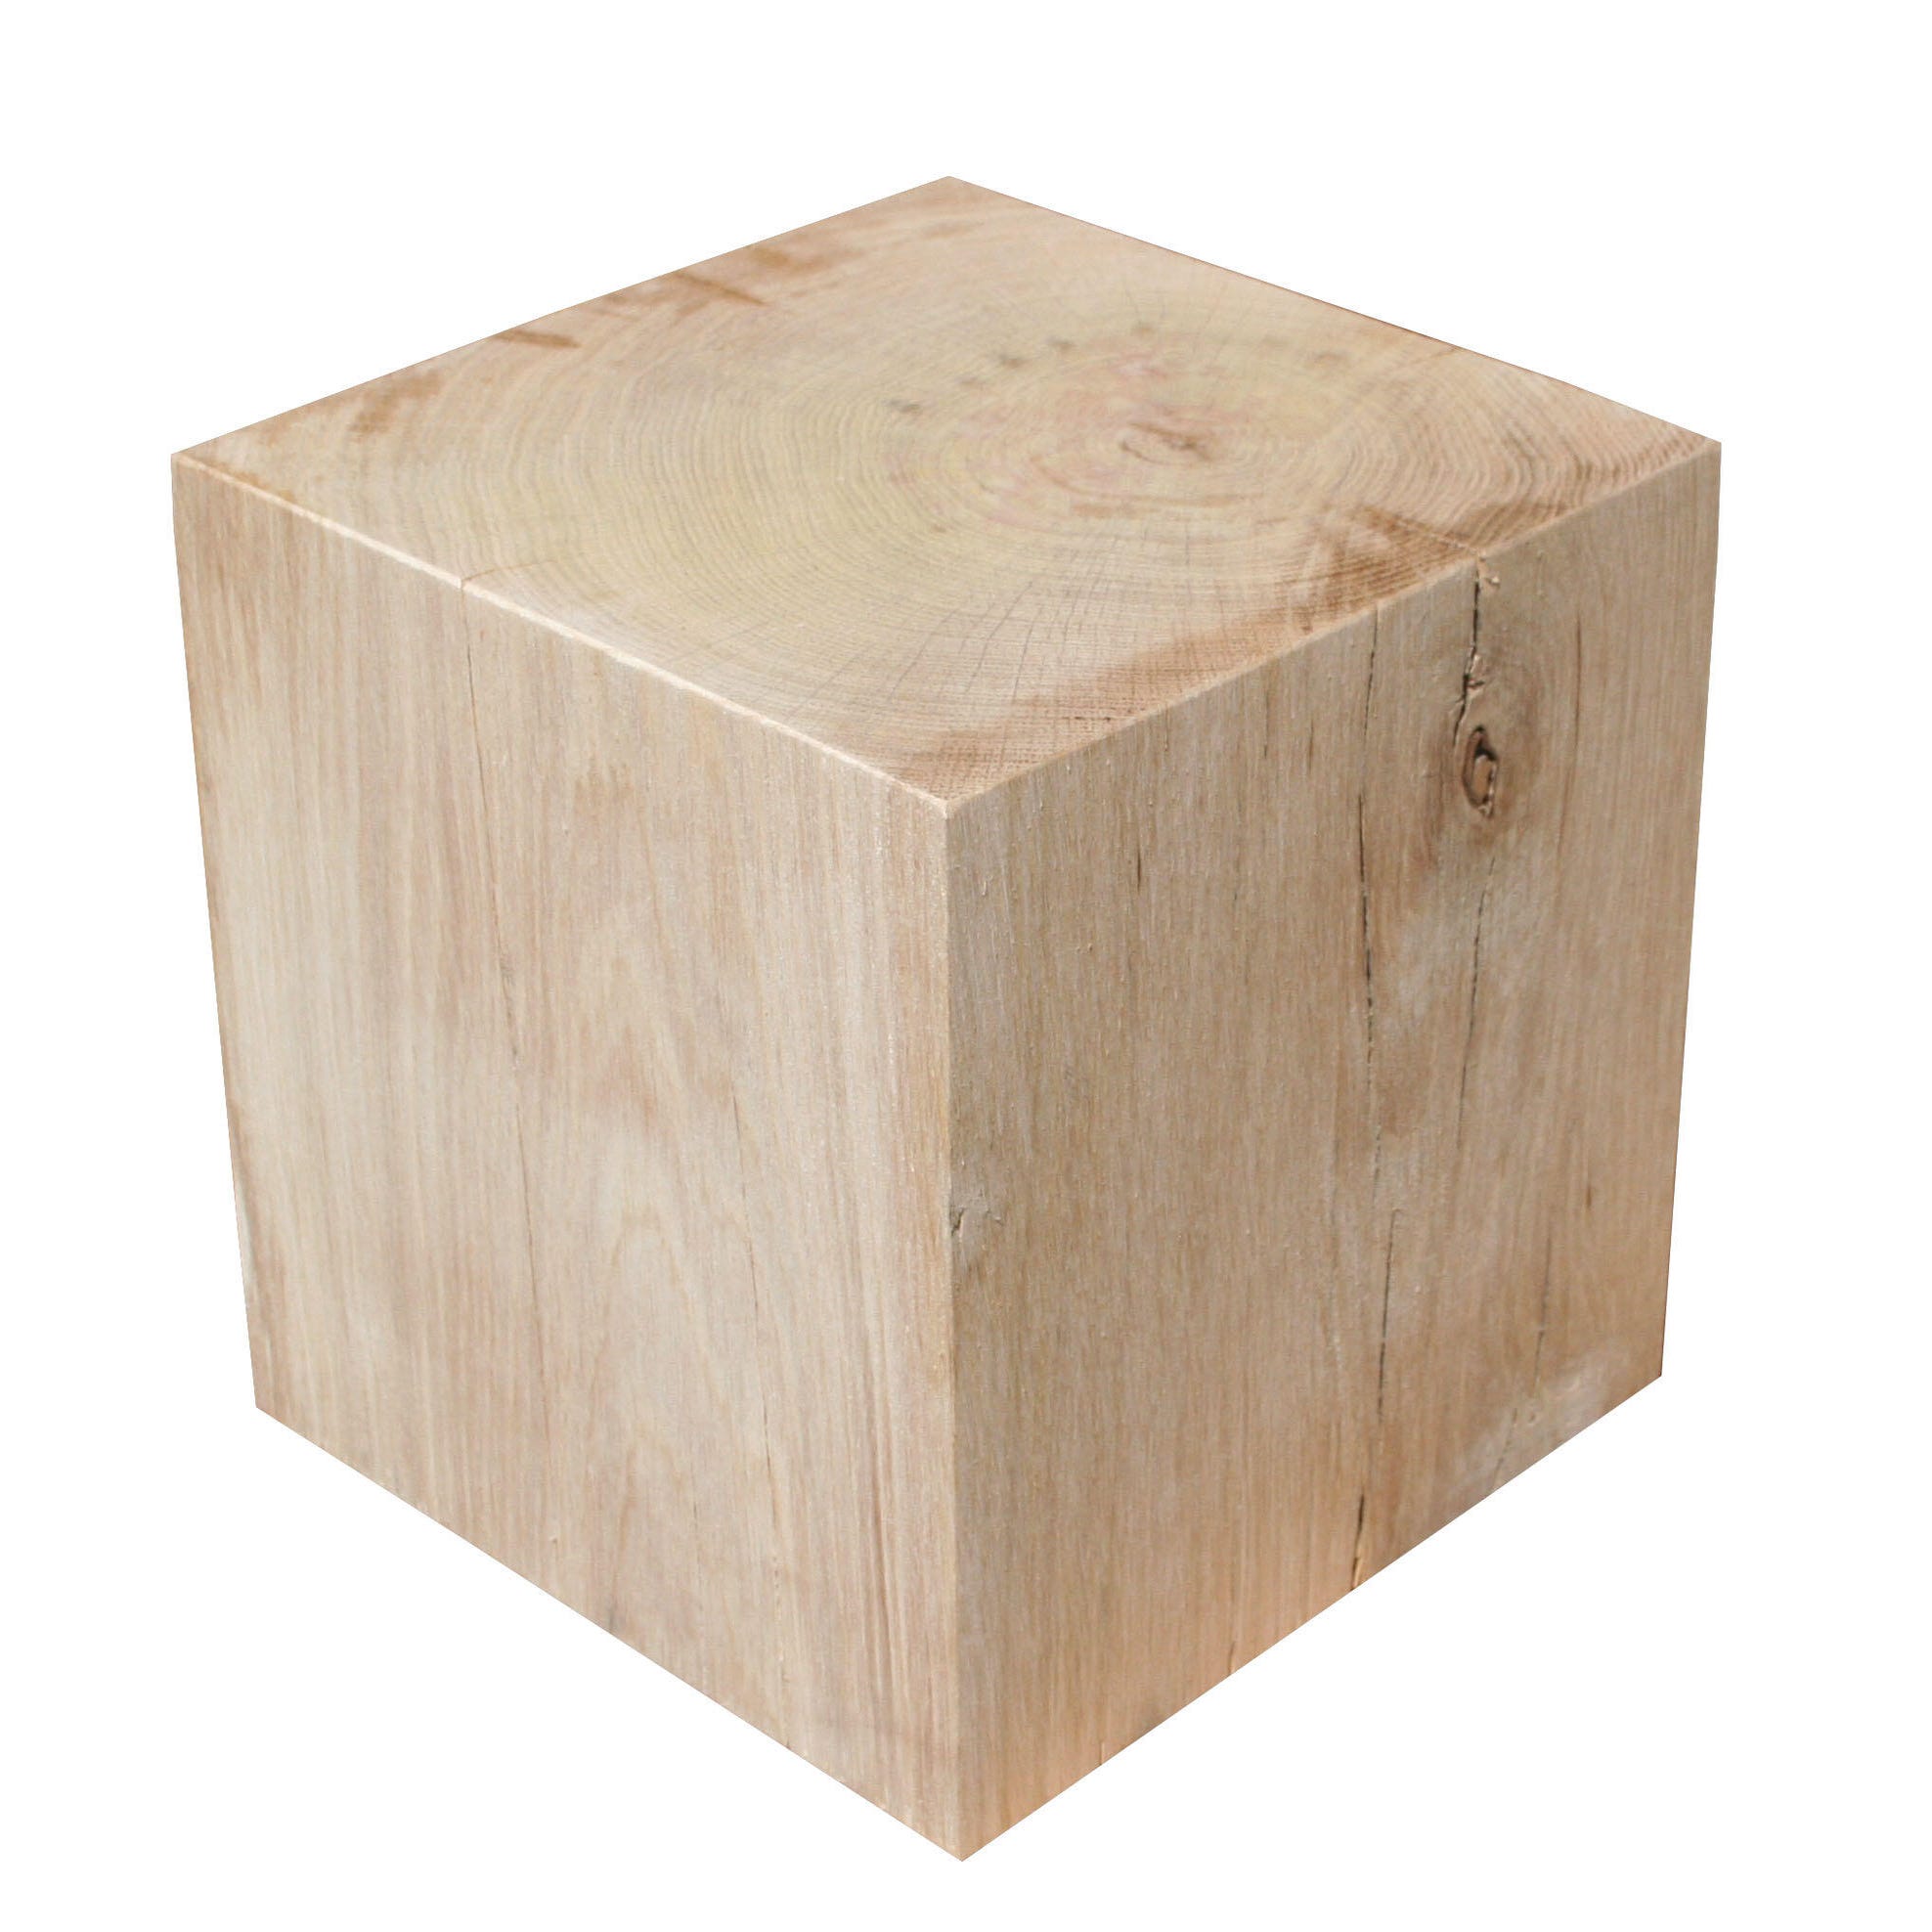 Cube chêne raboté 4 faces, 19 x 19 x 19 cm